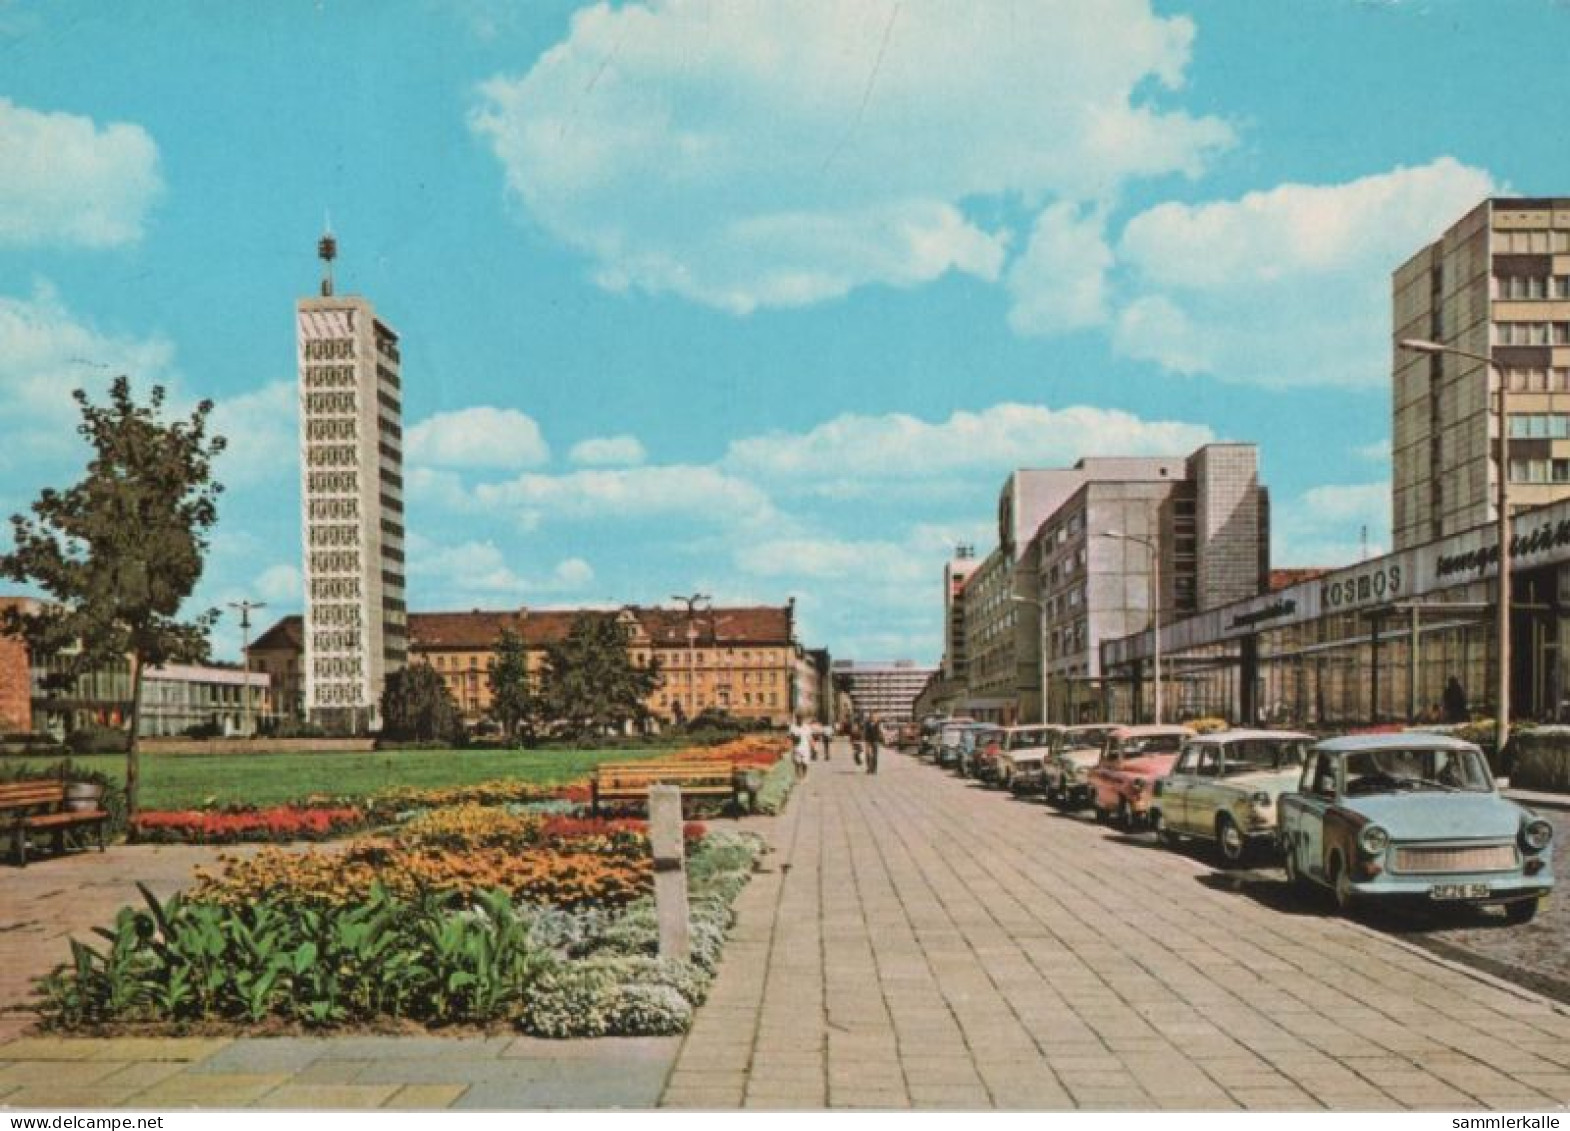 88802 - Neubrandenburg - Karl-Marx-Platz - 1979 - Neubrandenburg